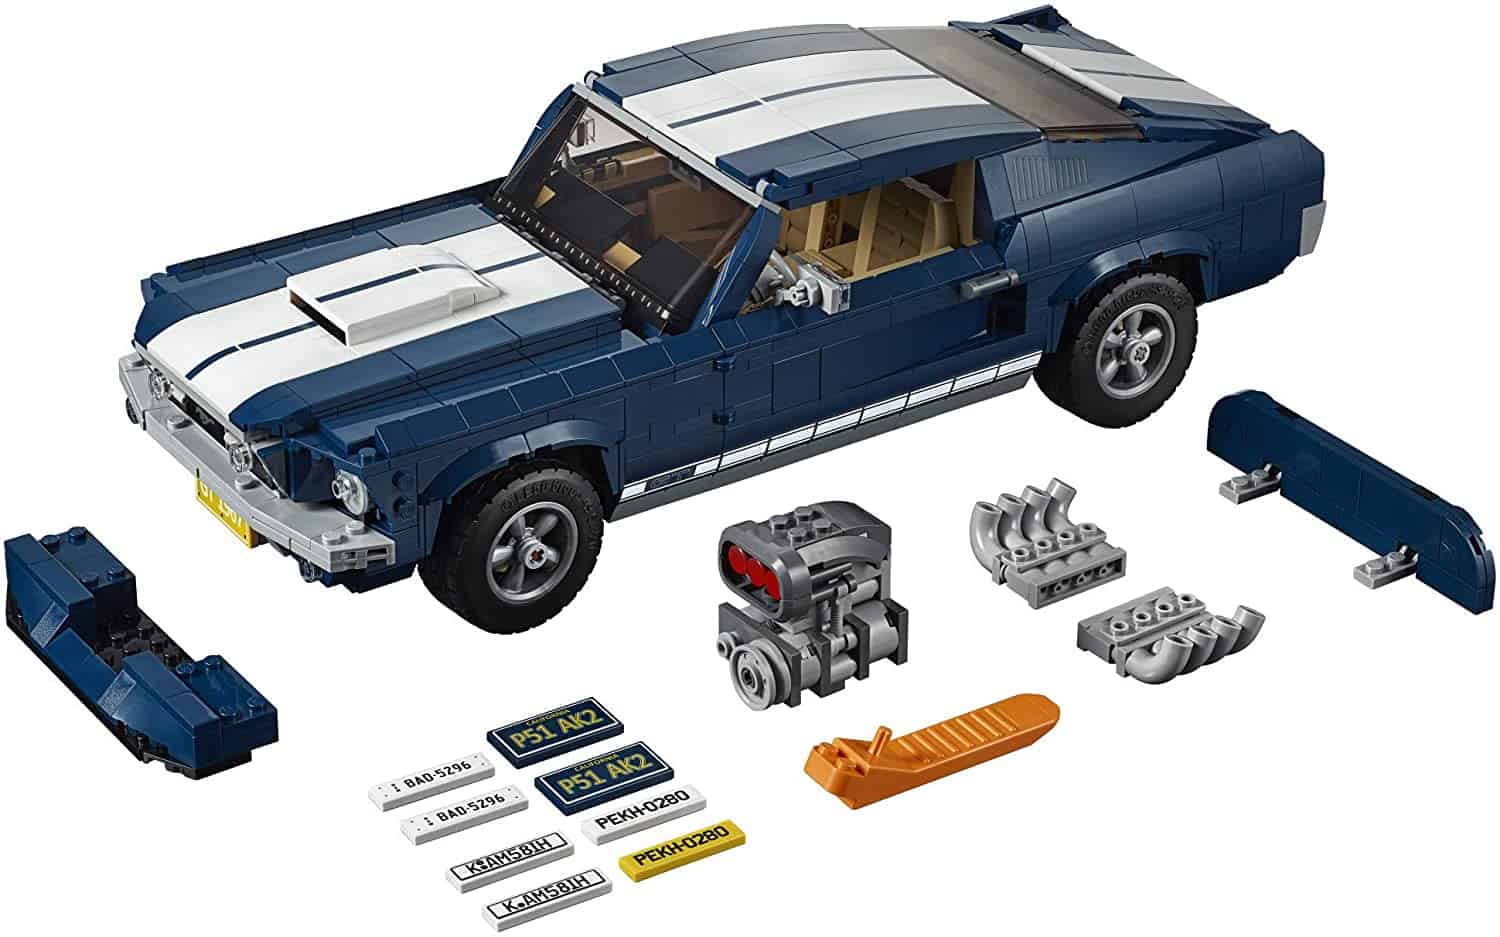 LEGO Creator Expert Ford Mustang car lego set